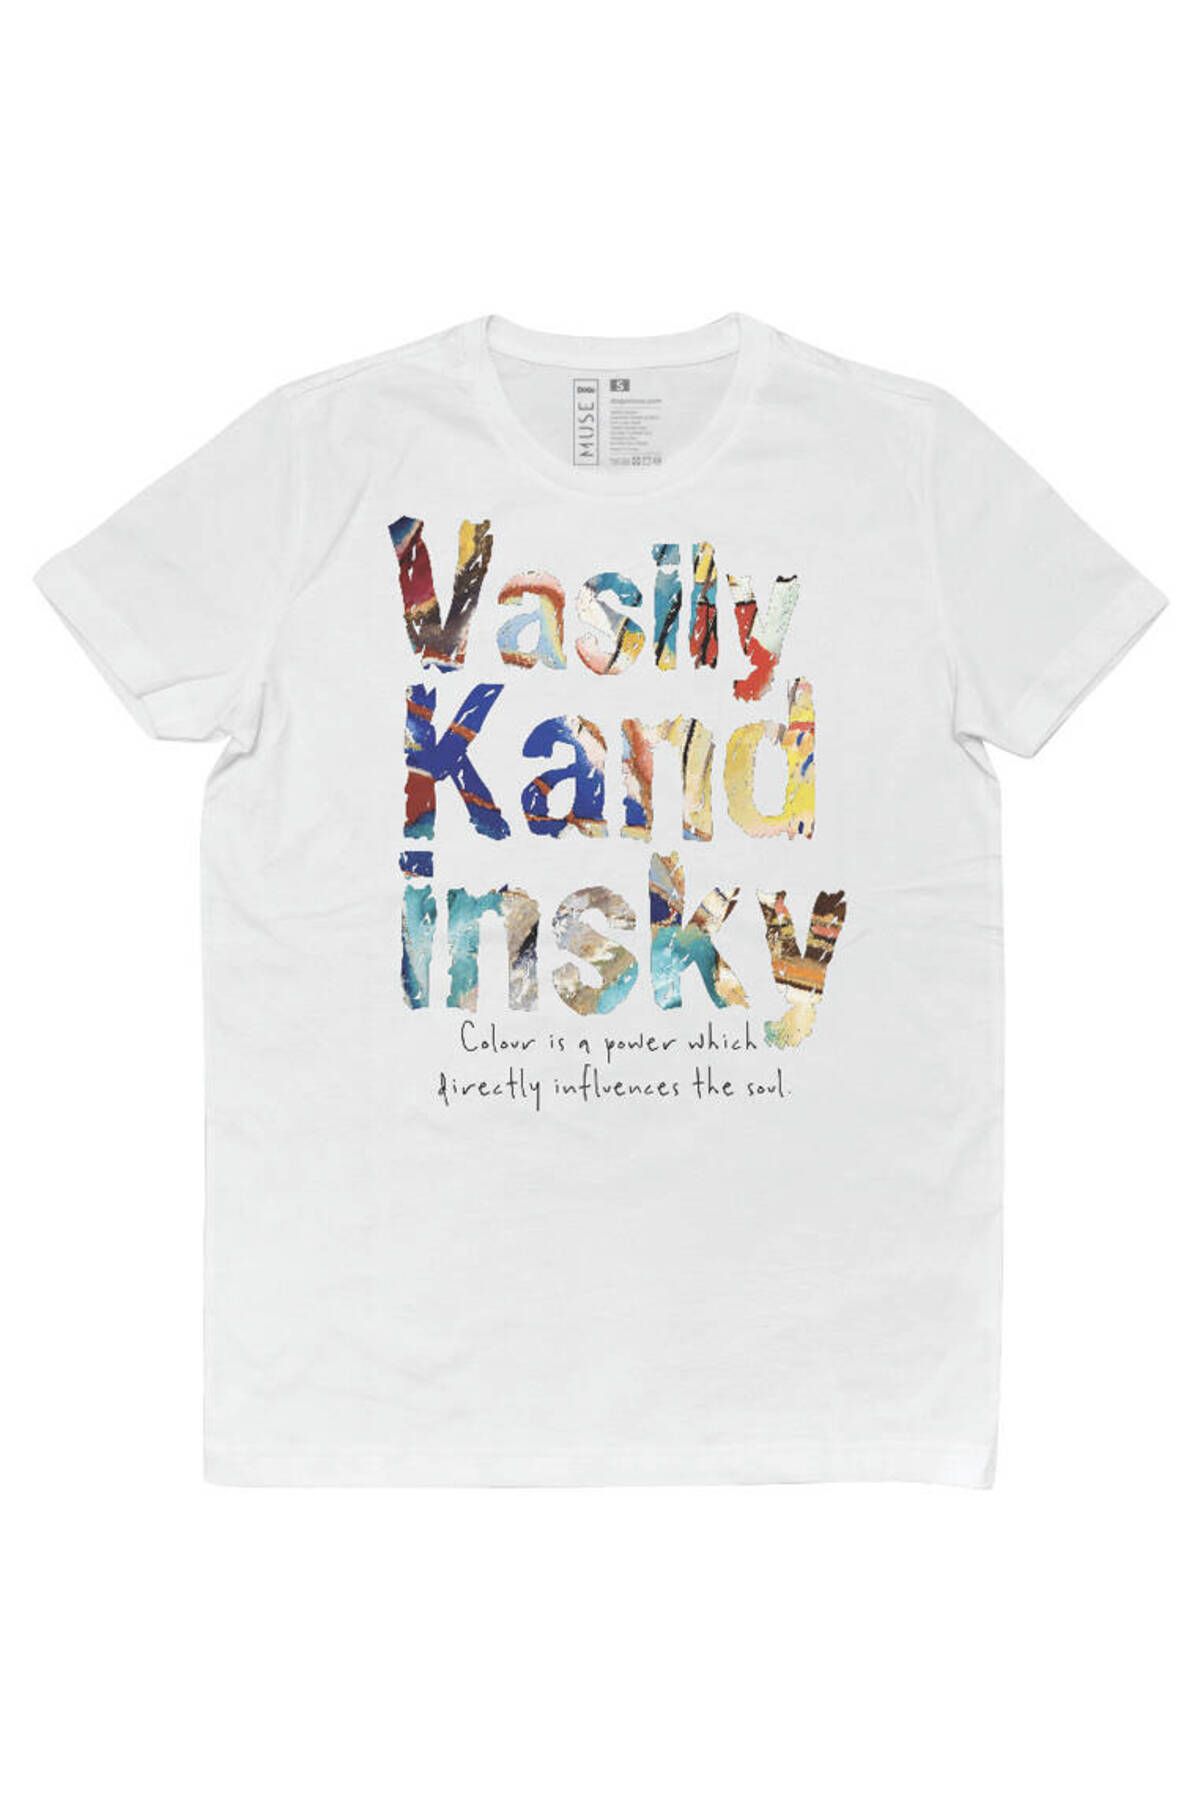 Dogo Unisex Vegan Beyaz T-shirt - Vasily Kandinsky Colour Of The Soul Muse Tasarım